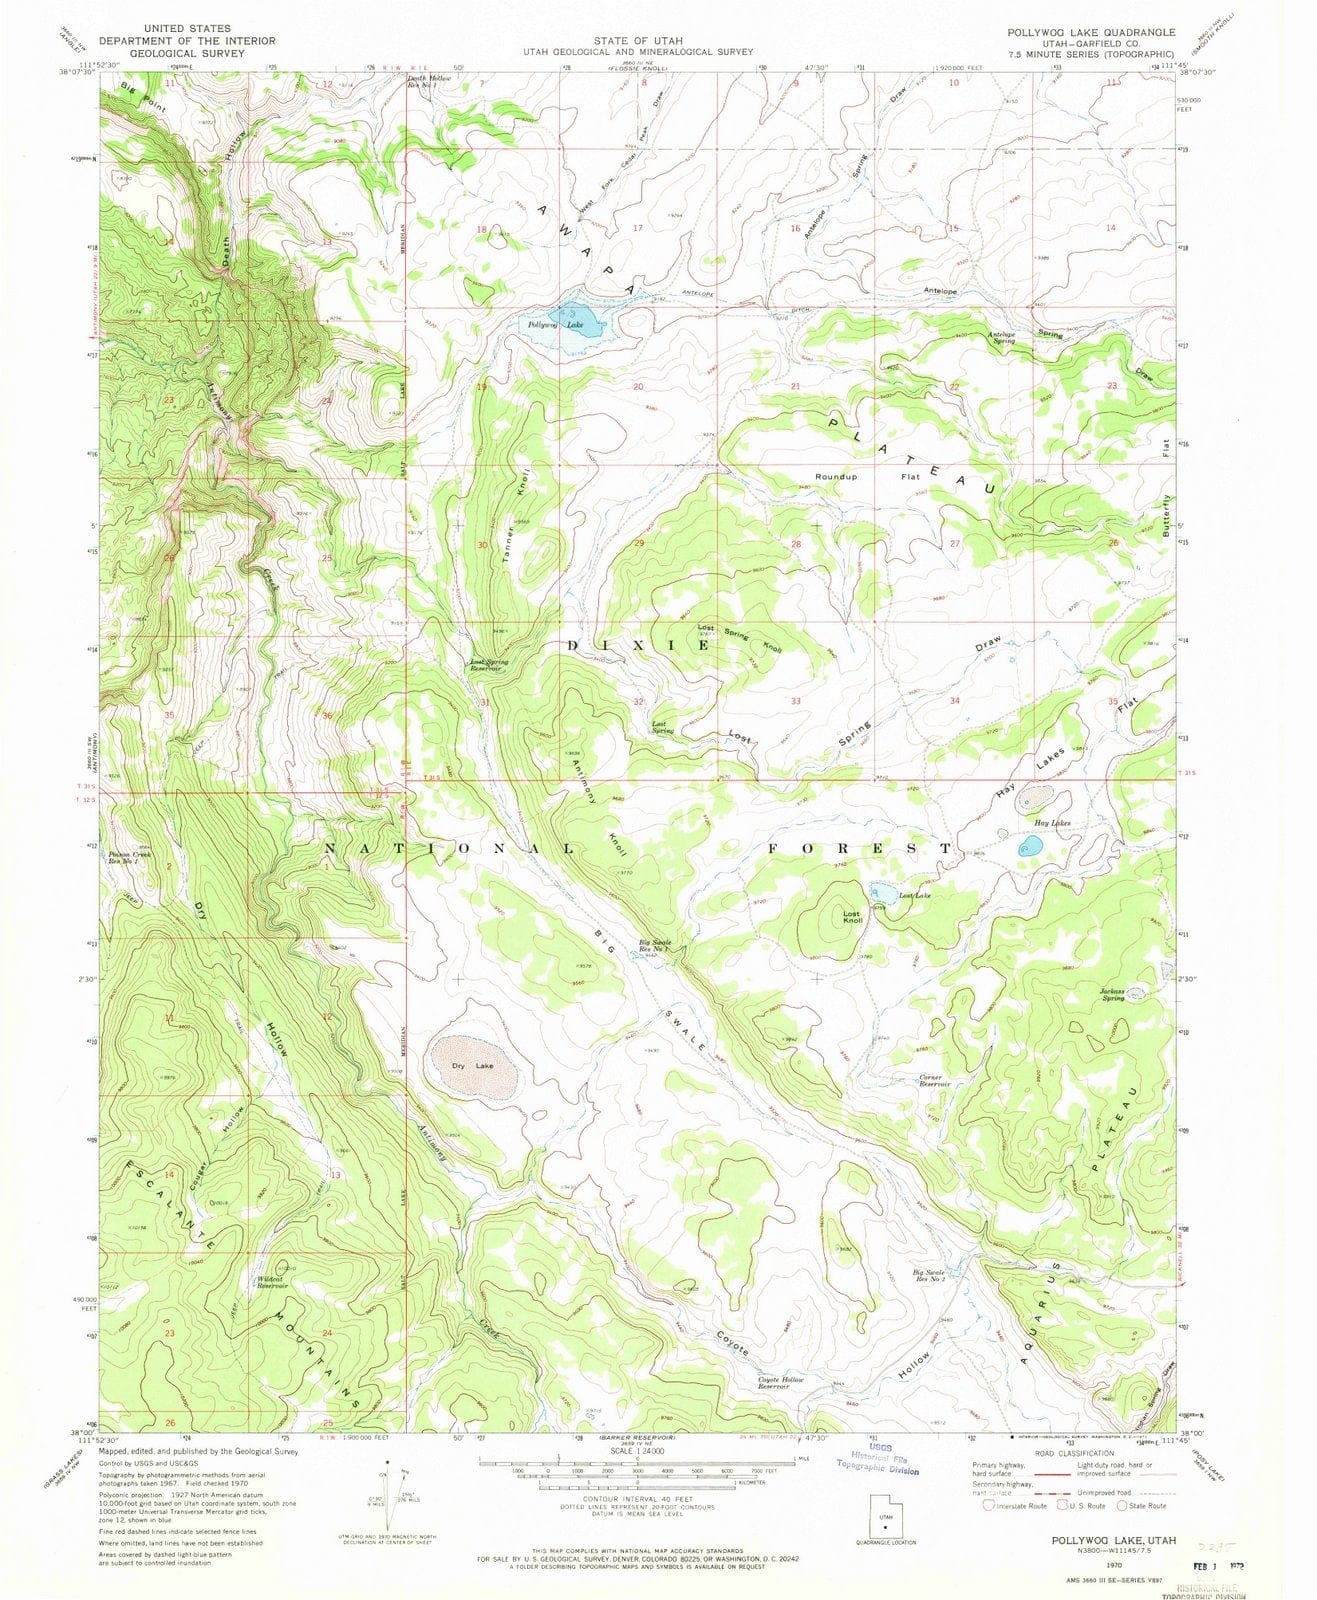 1970 Pollywog Lake, UT - Utah - USGS Topographic Map